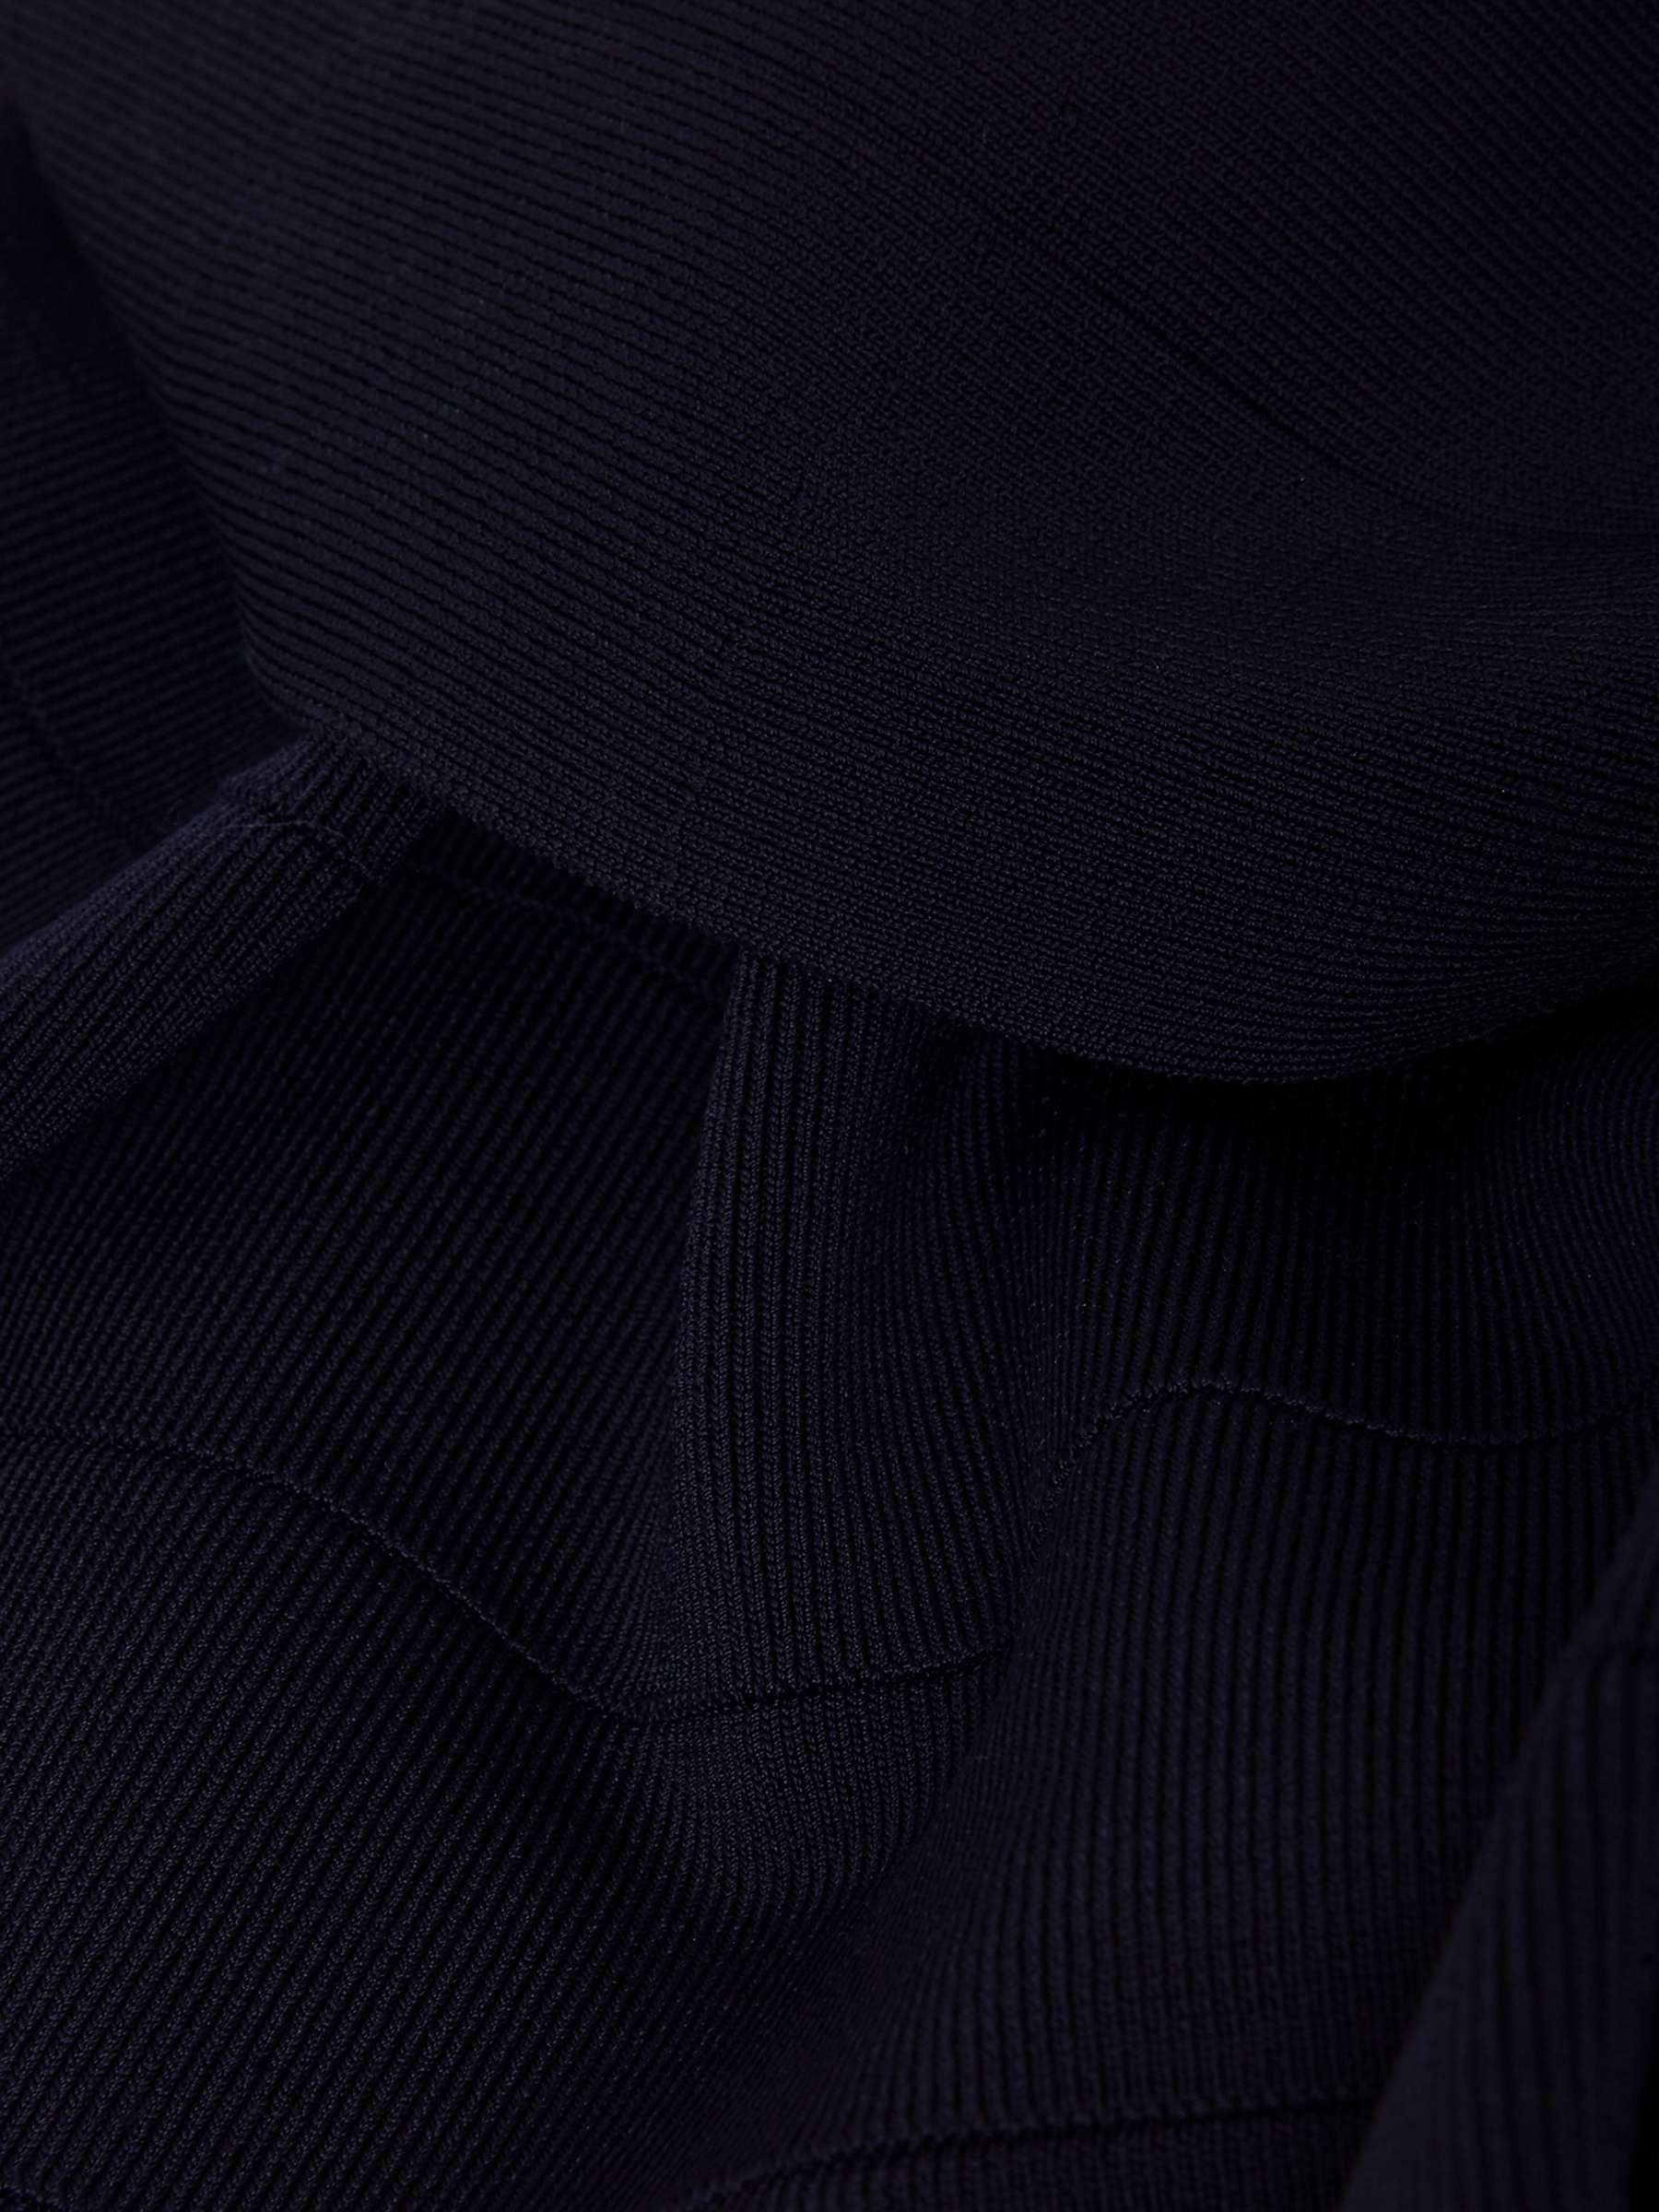 Buy Phase Eight Zella Knitted Bandage Dress, Navy Online at johnlewis.com